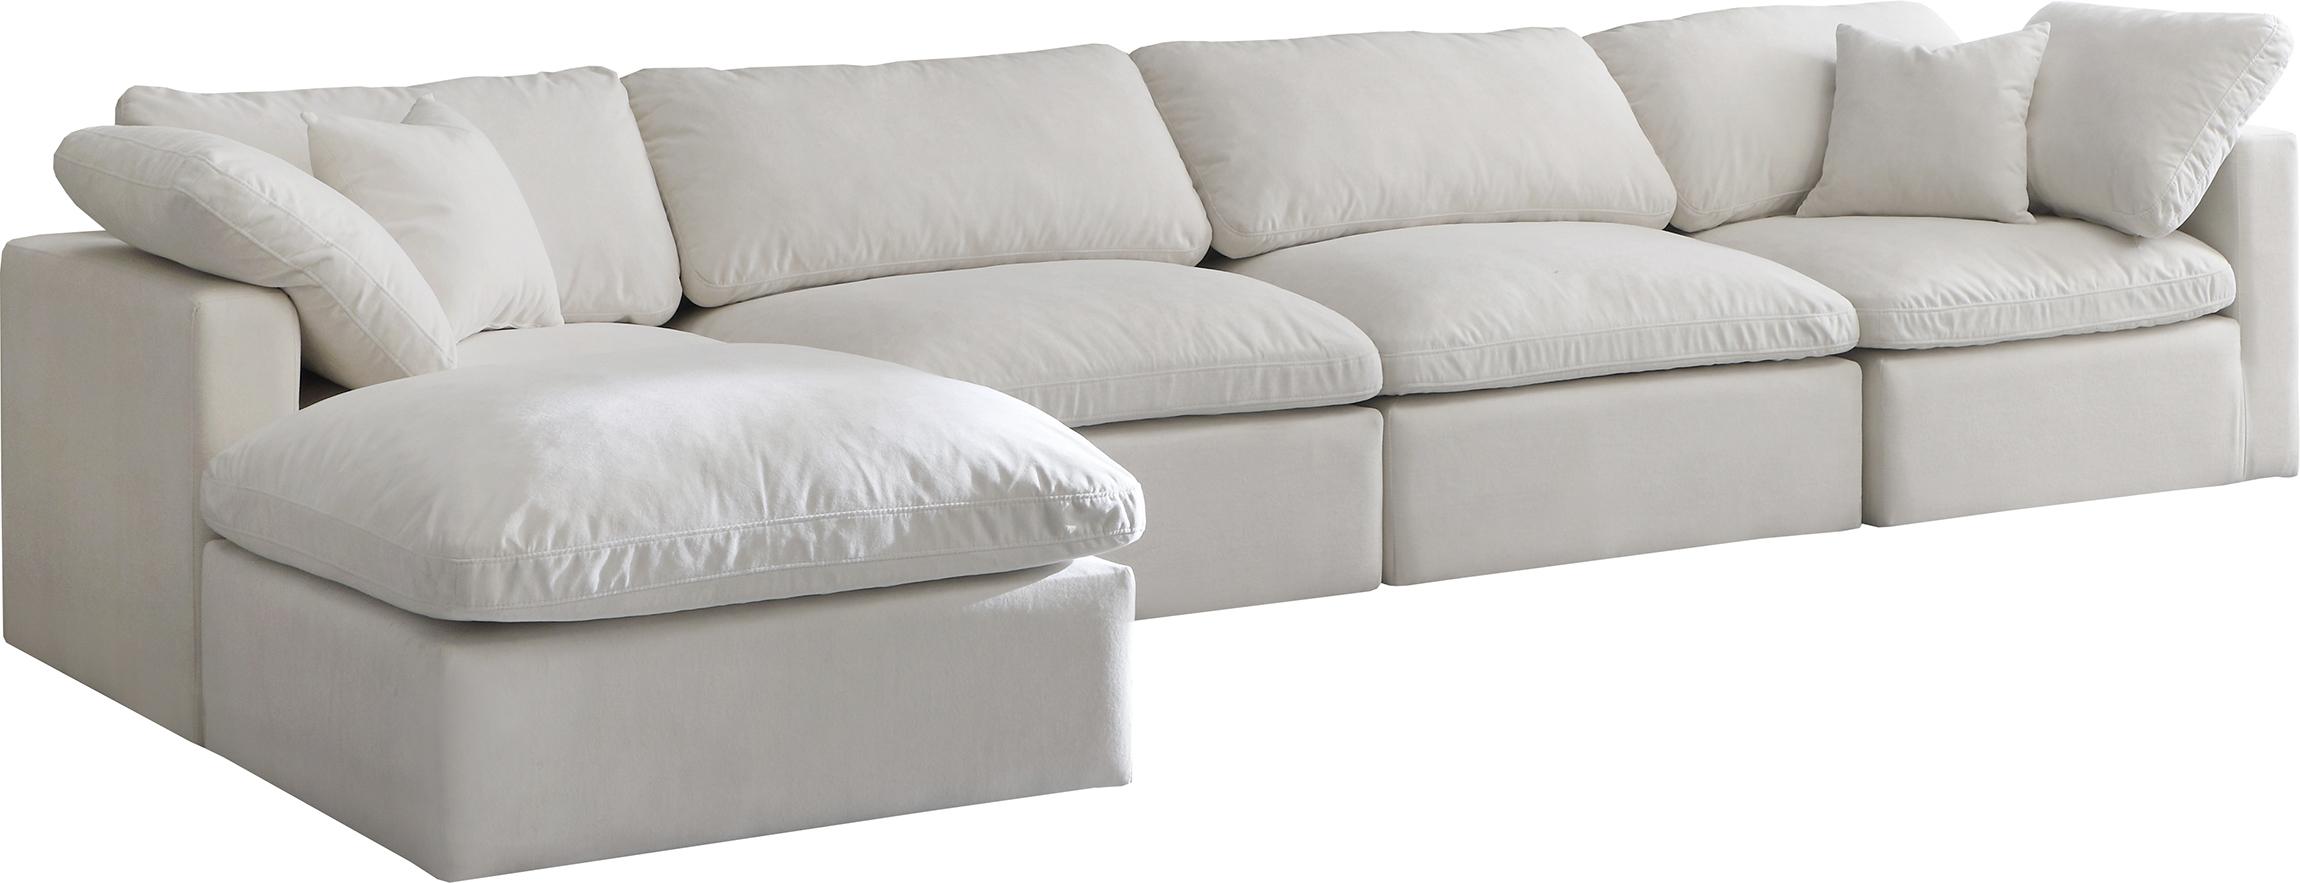 Contemporary, Modern Modular Sectional Sofa 602Cream-Sec5A 602Cream-Sec5A in Cream Fabric